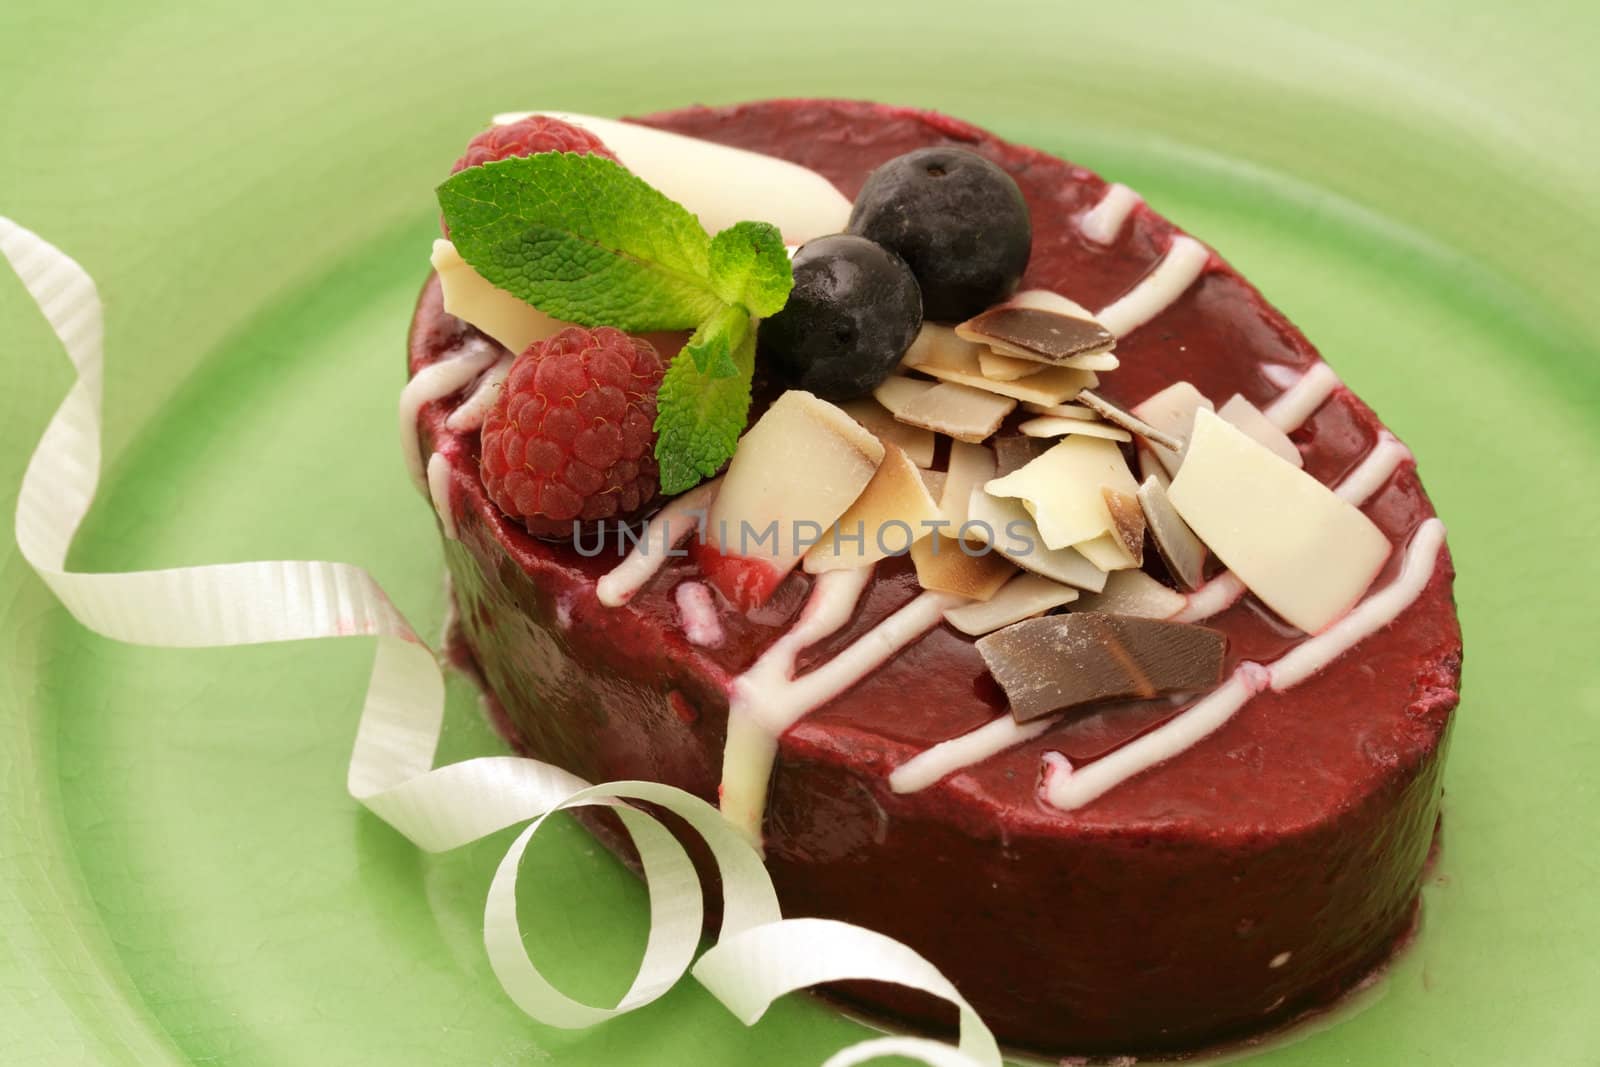 Raspberry mousse cake by Hbak